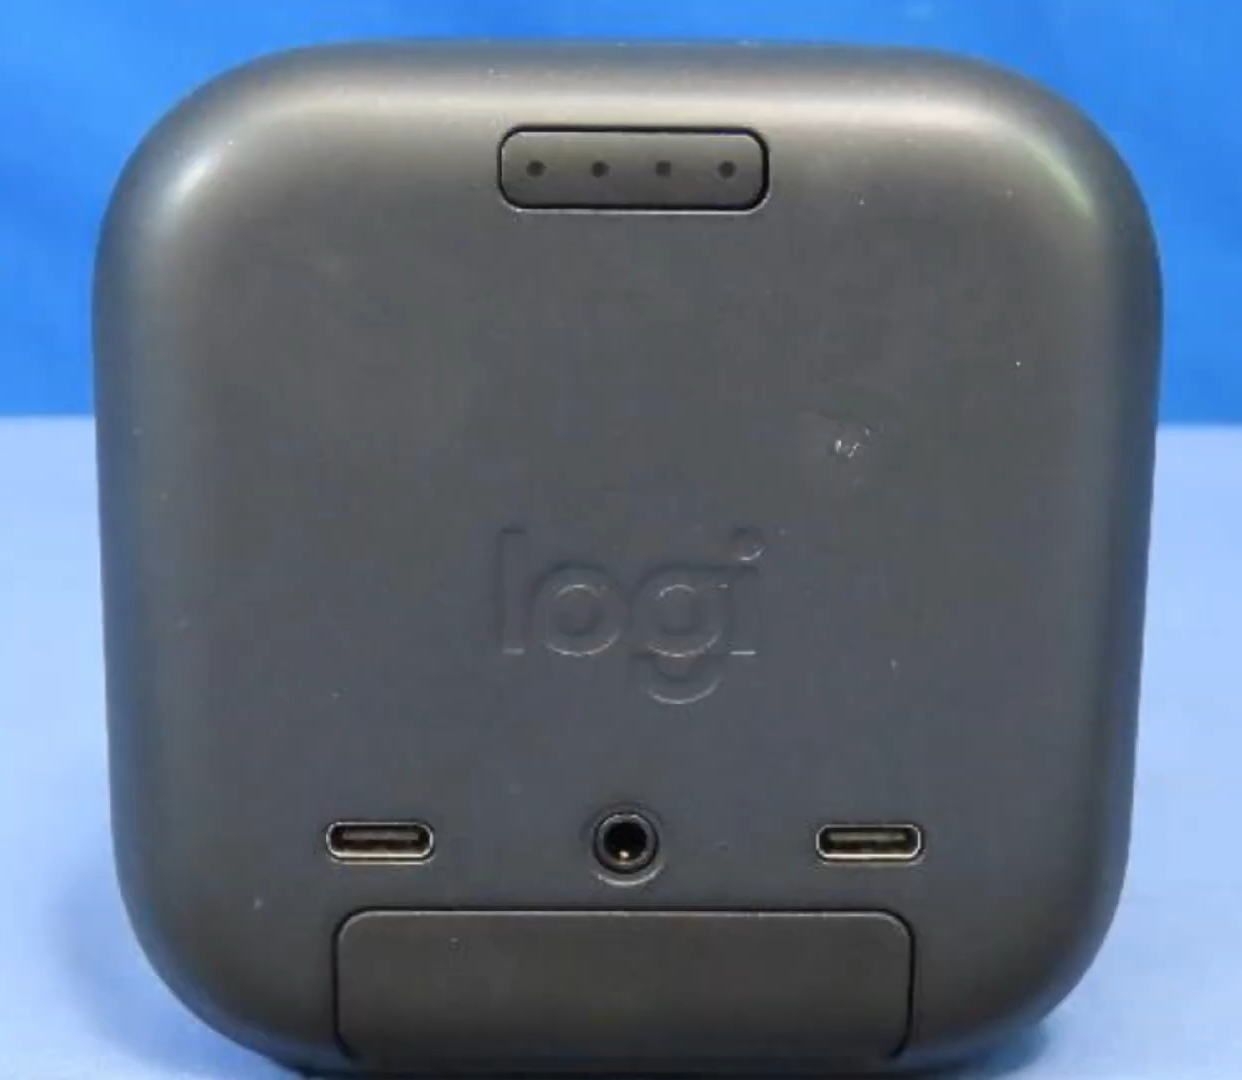 Задняя панель камеры Logitech Mevo Core с кнопкой включения, разъемами и заглушкой